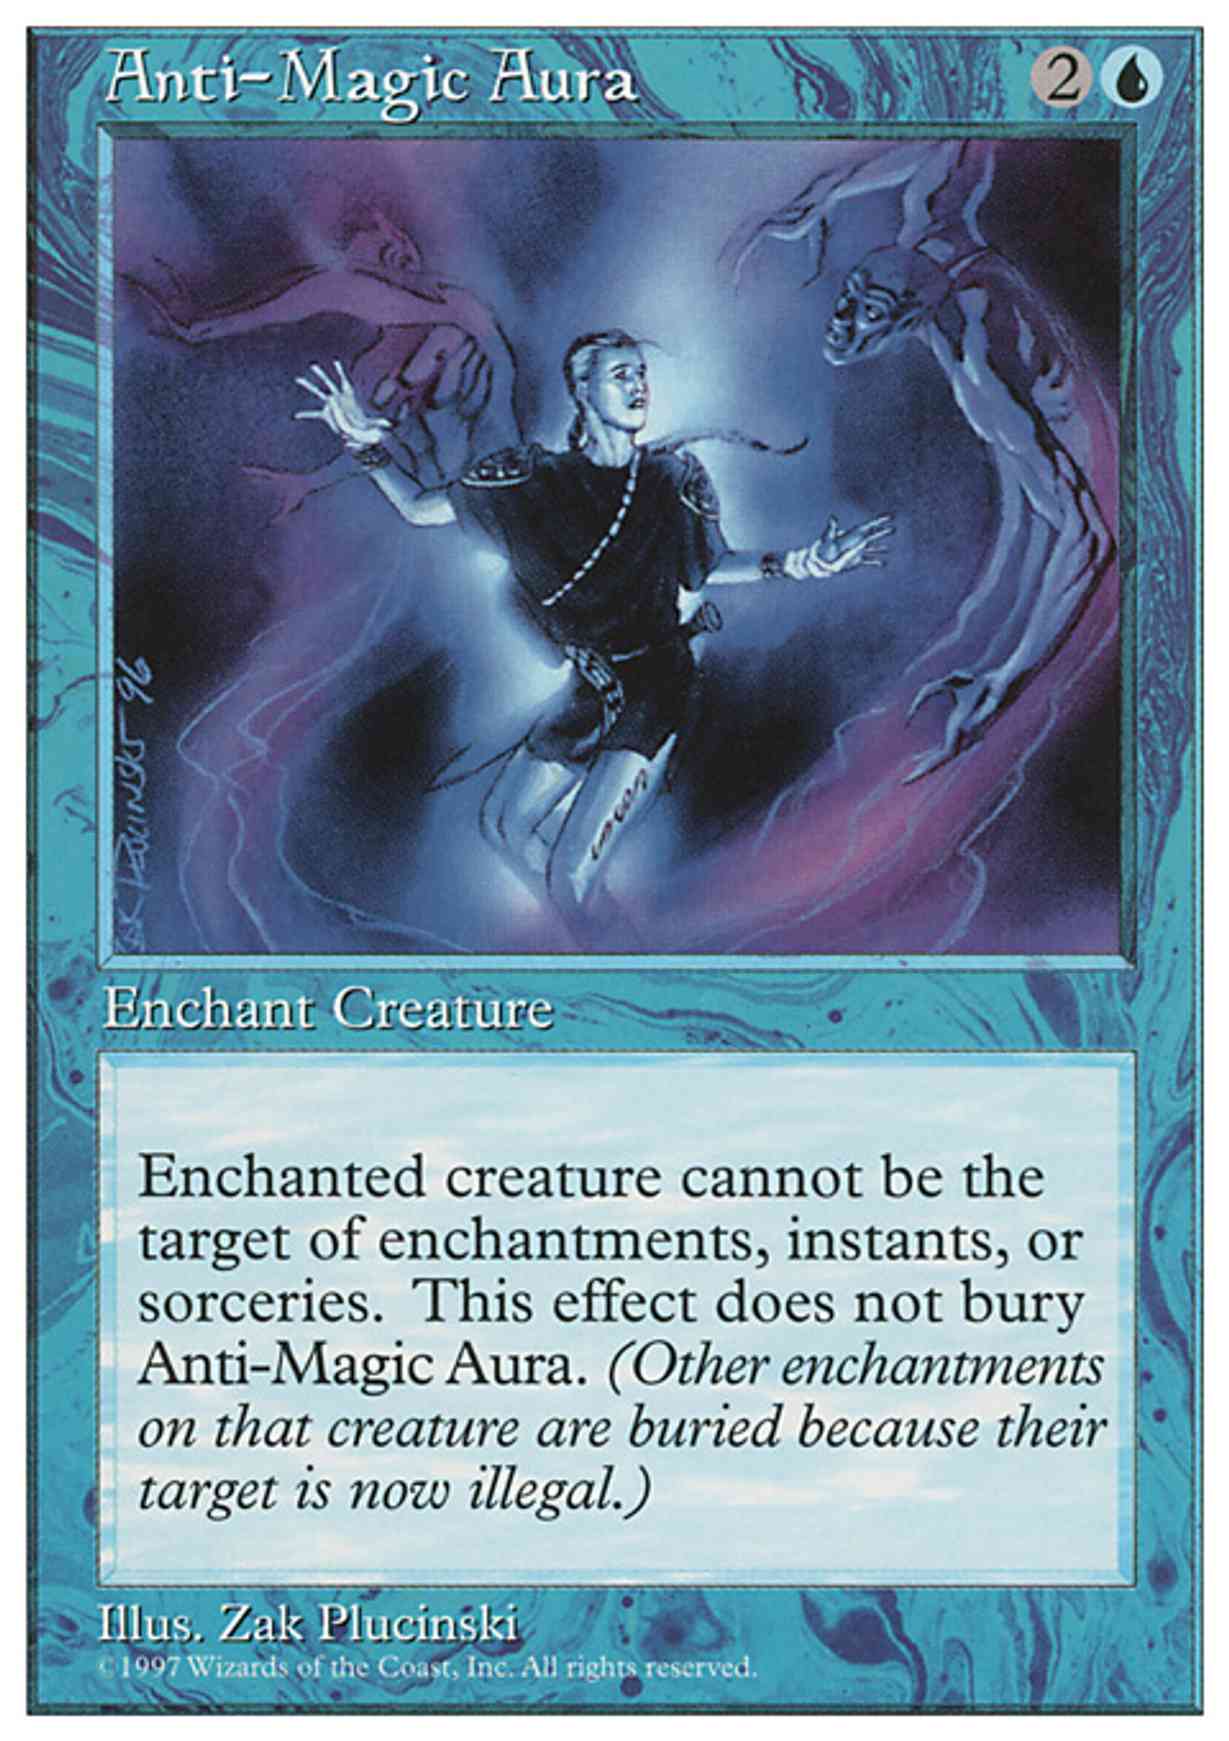 Anti-Magic Aura magic card front